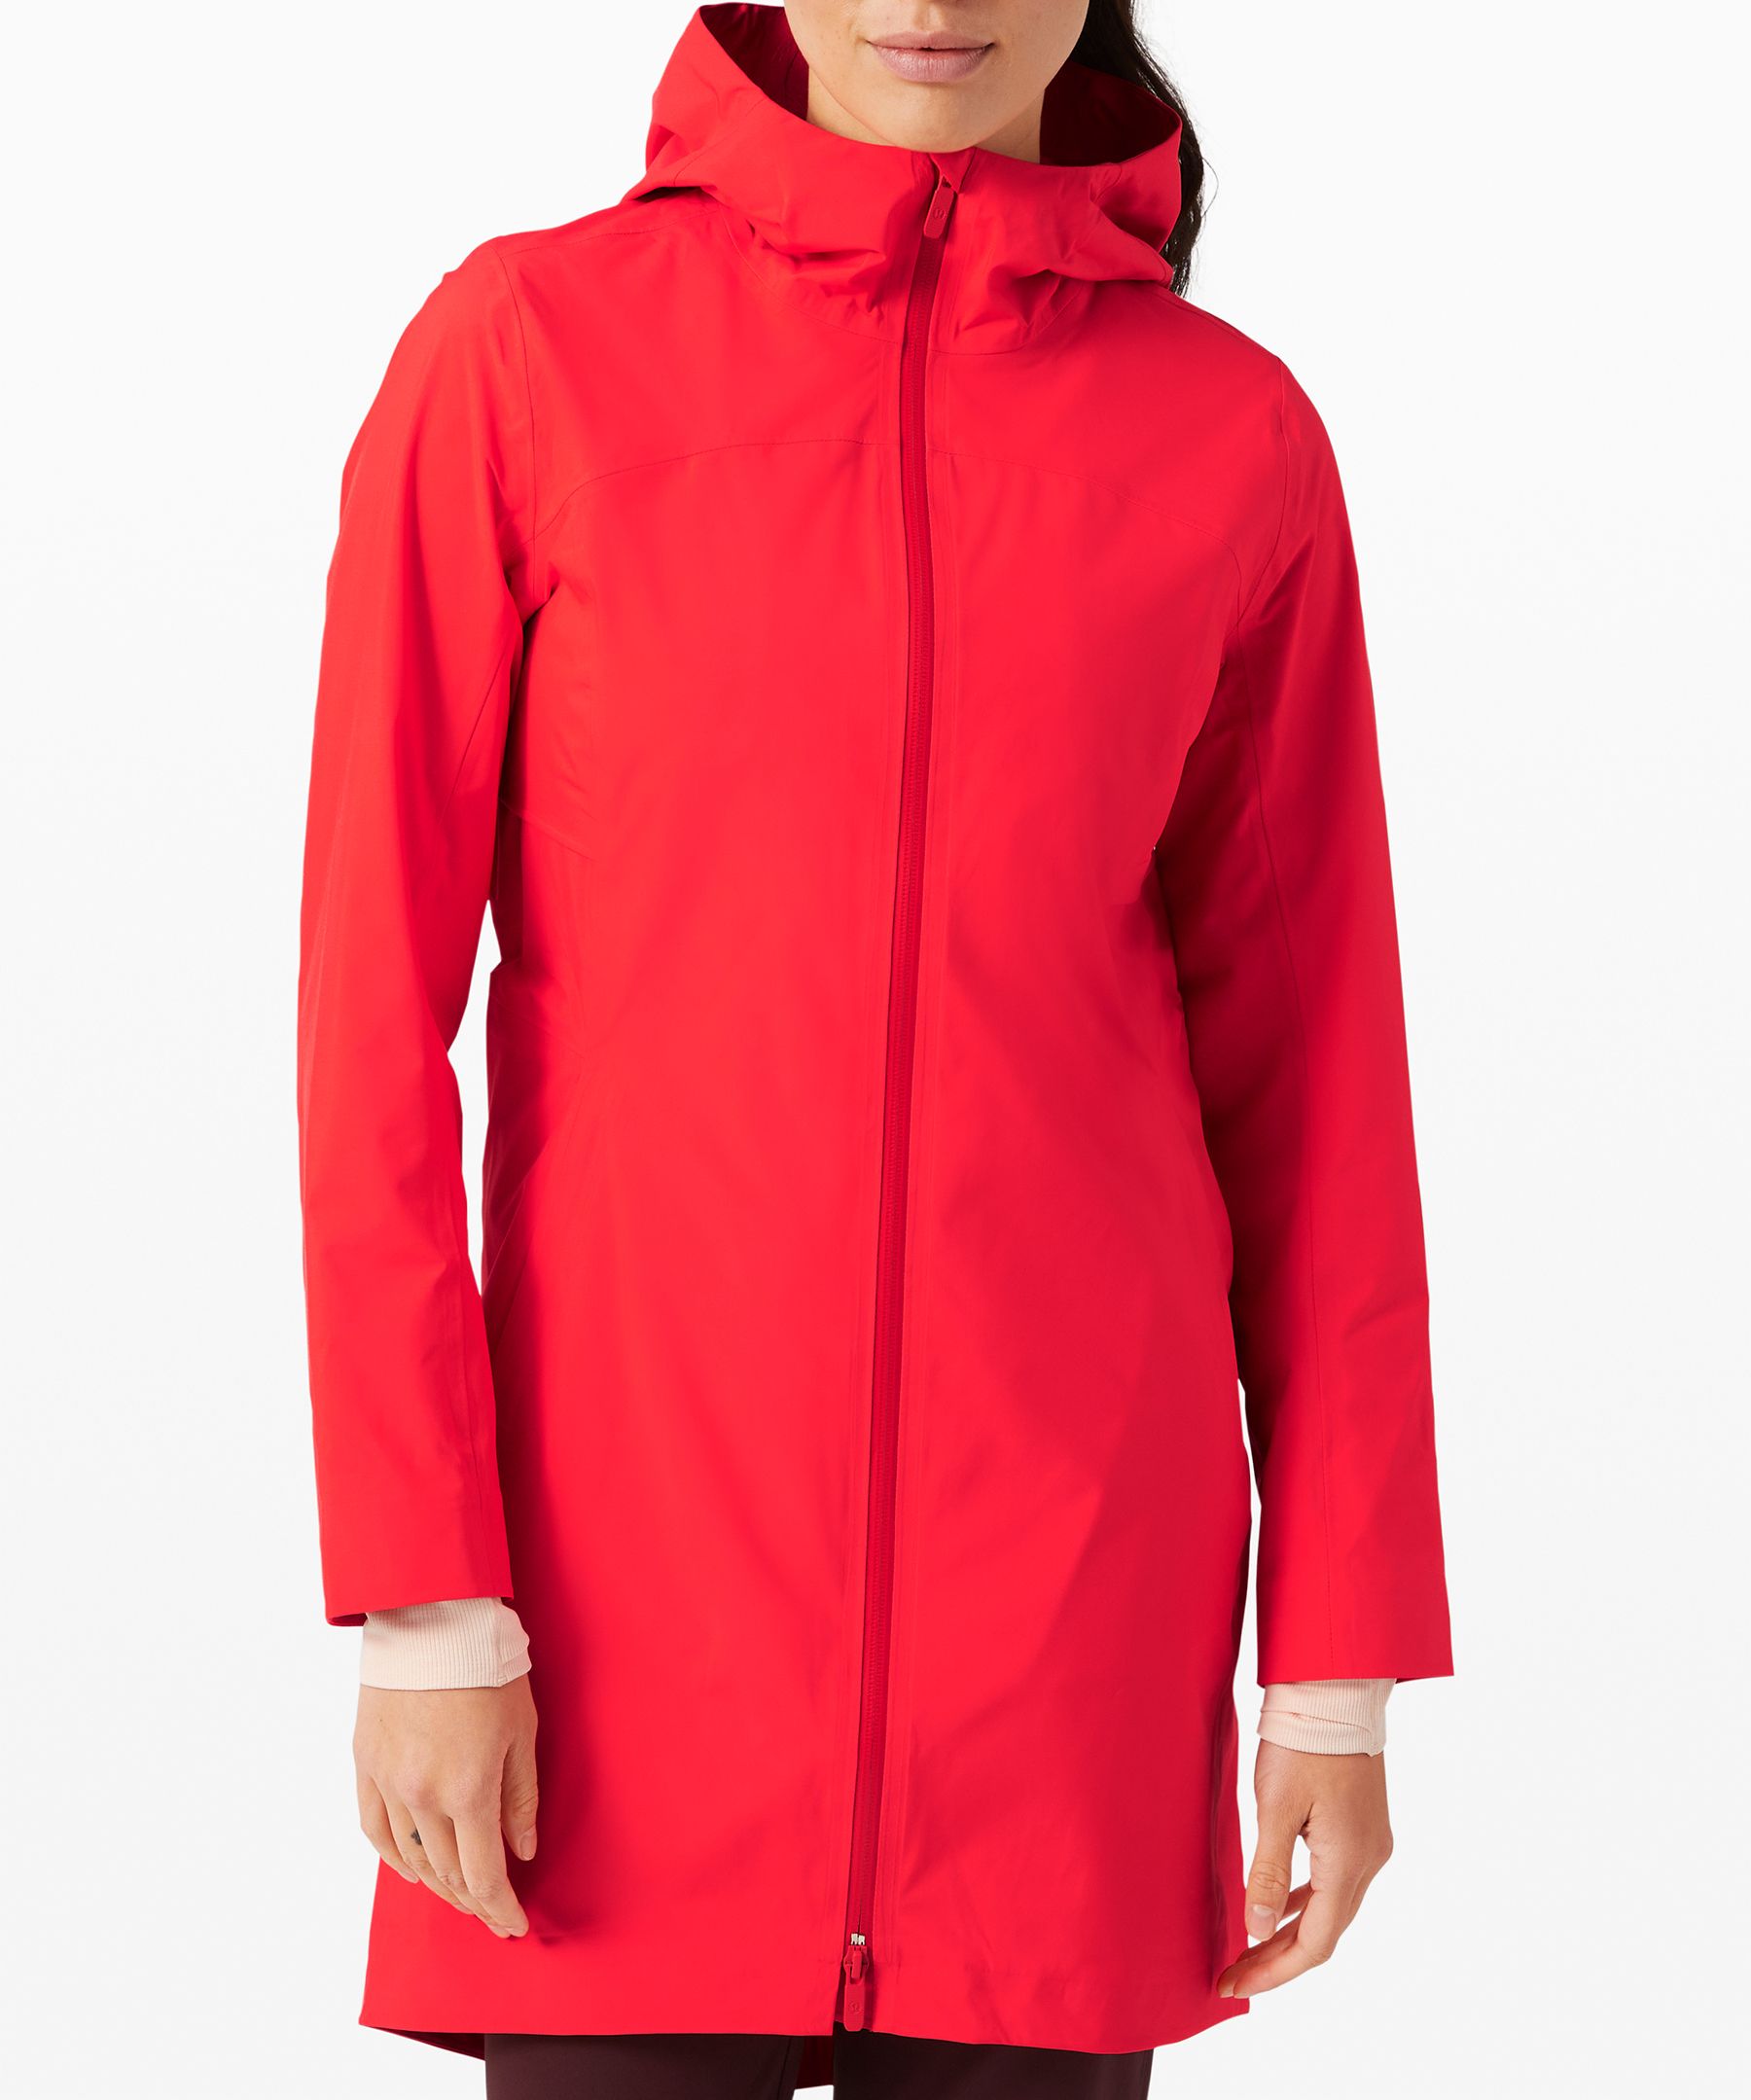 Lululemon Rain Rebel Jacket In Carnation Red